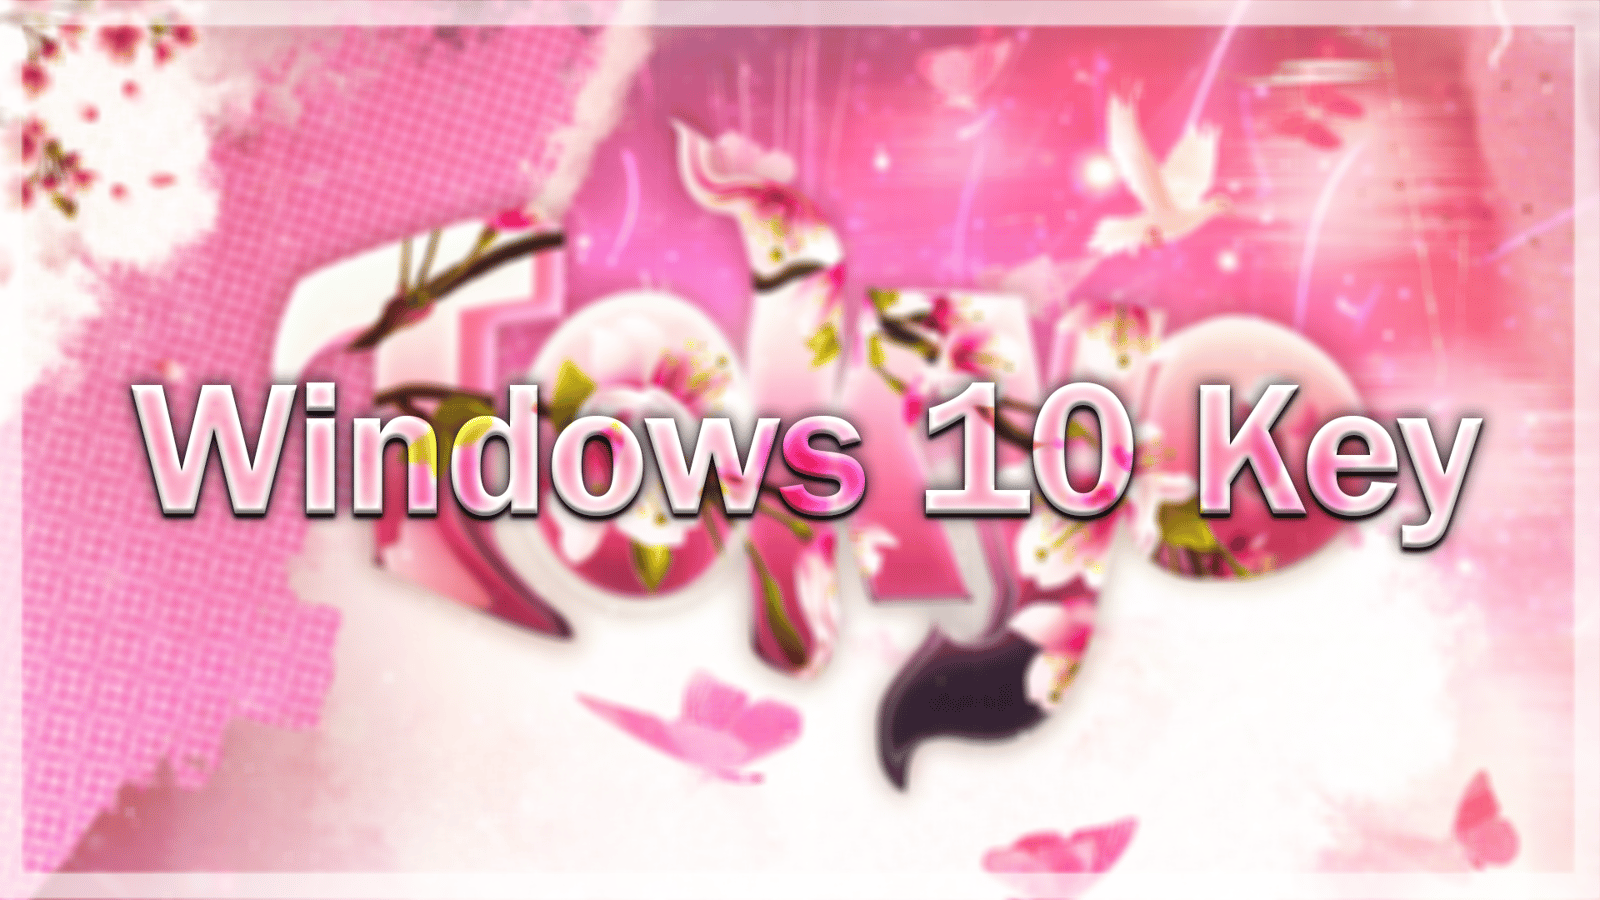 Windows 10 Key (1 PC) ➙ Home